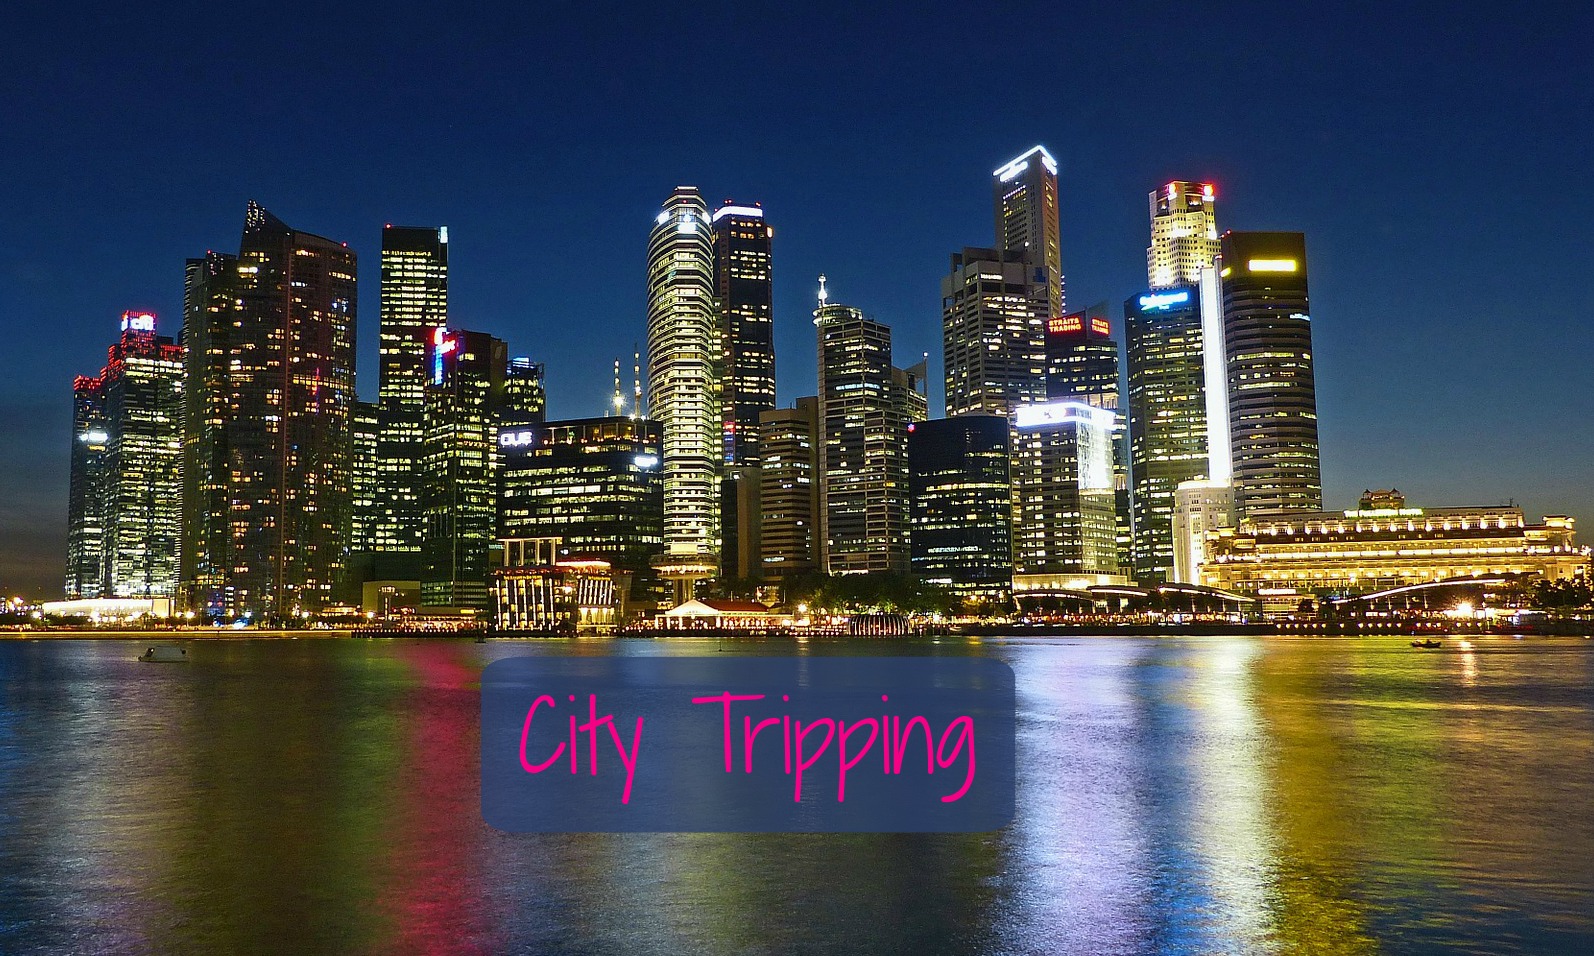 Singapore City Tripping 73